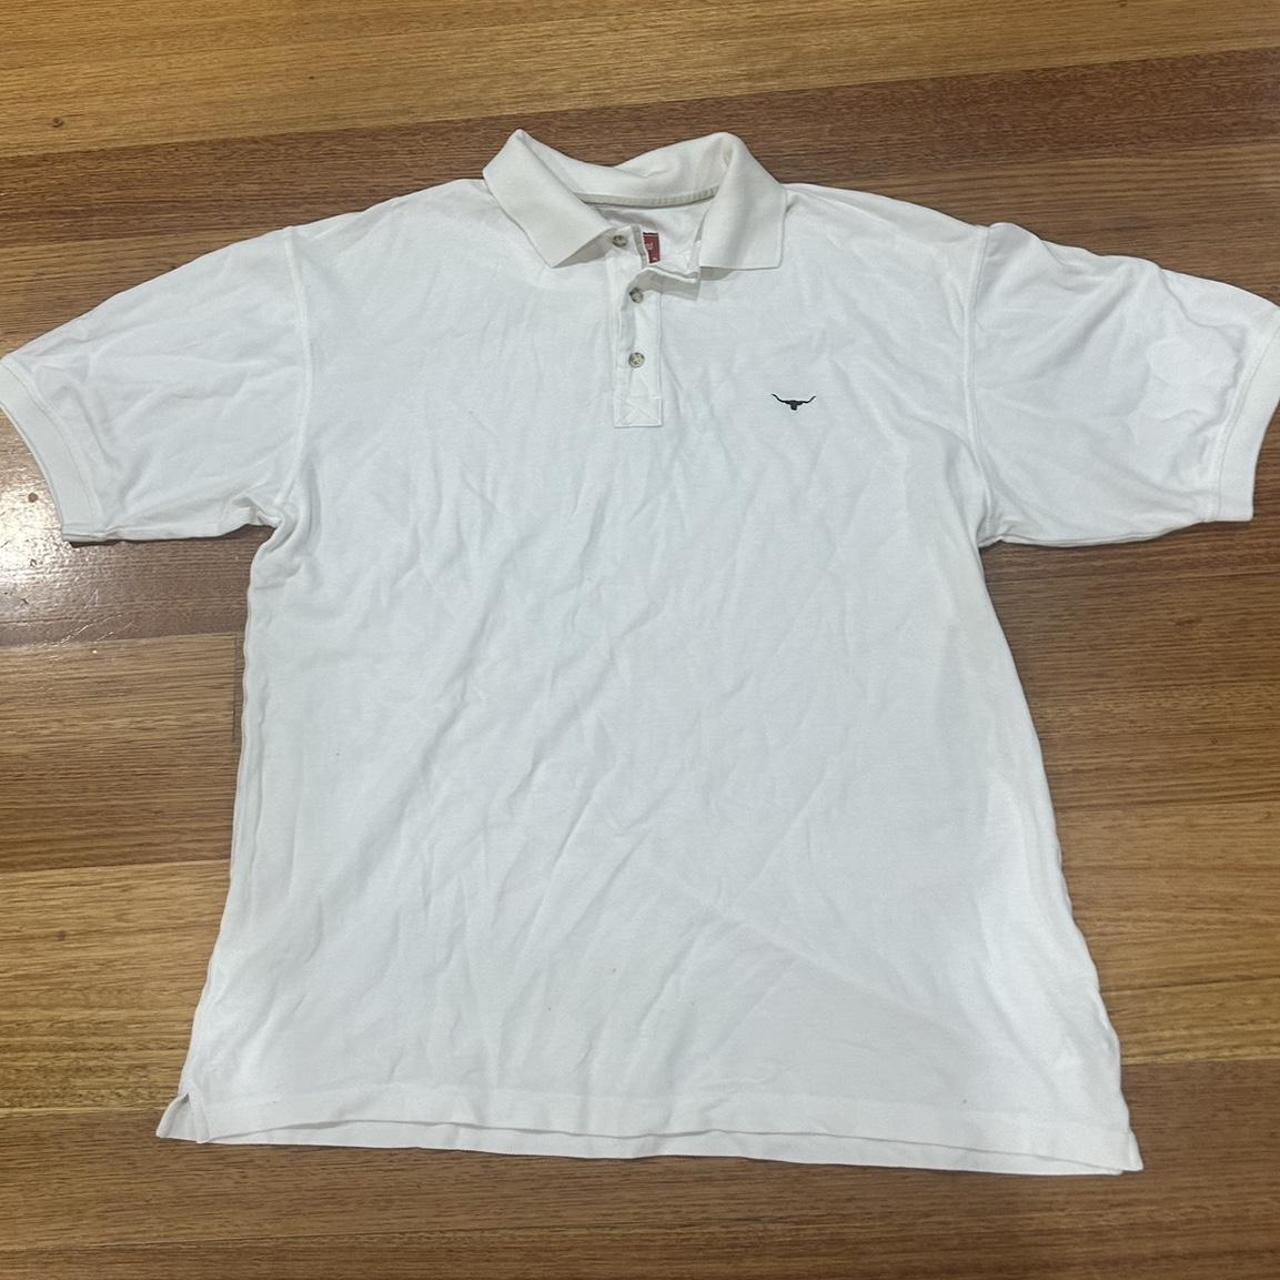 RM Williams polo shirt Size XL #rmwilliams - Depop